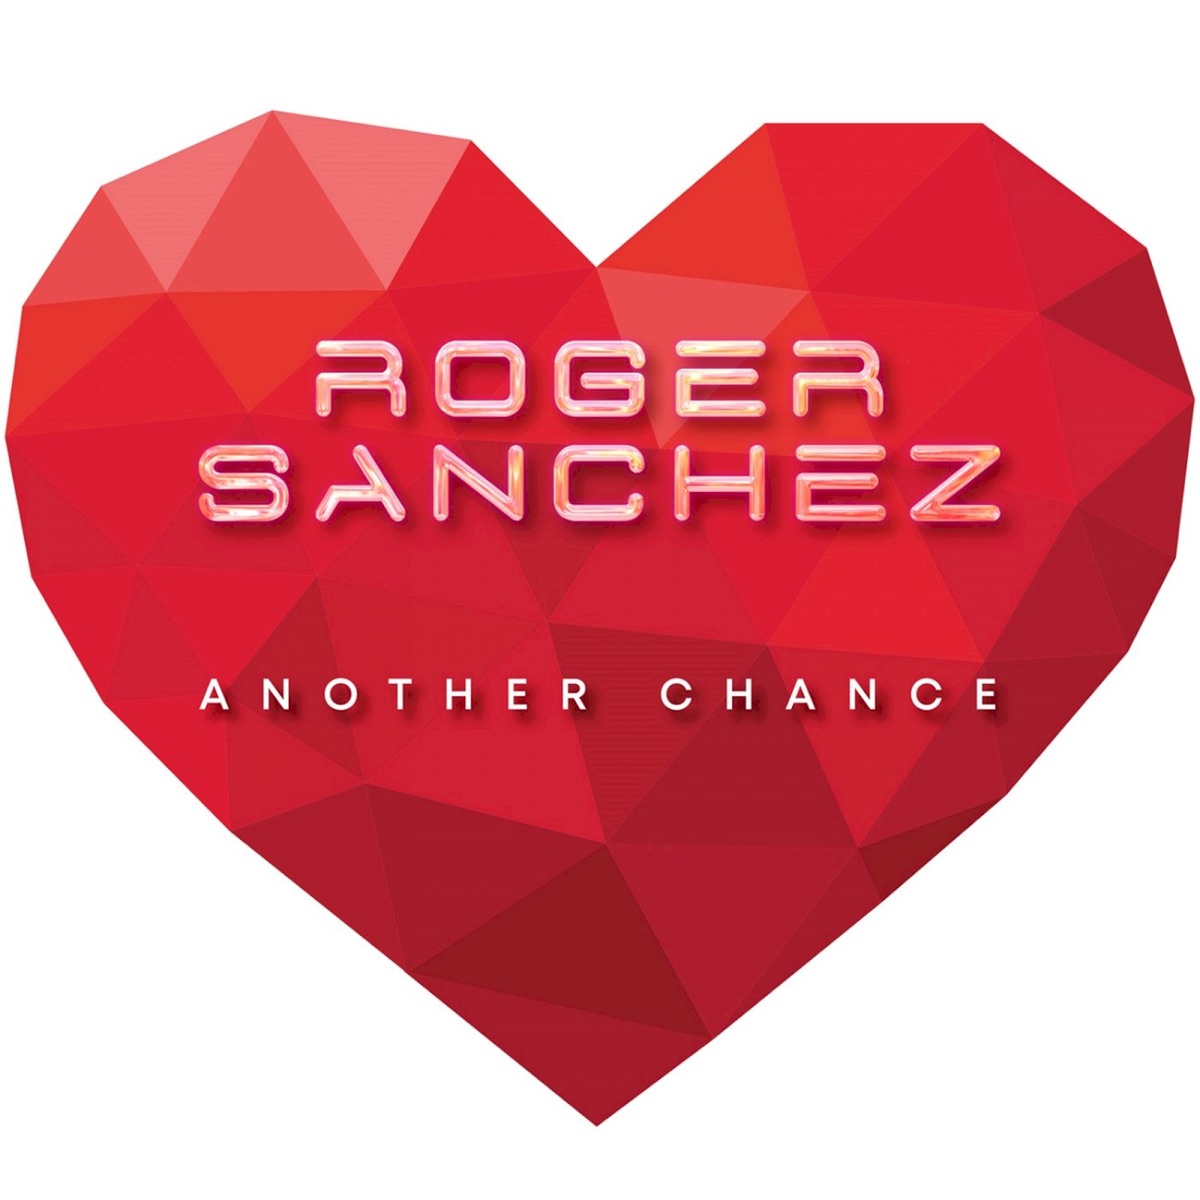 Roger Sanchez - 2Gether (Eden Prince Remix)